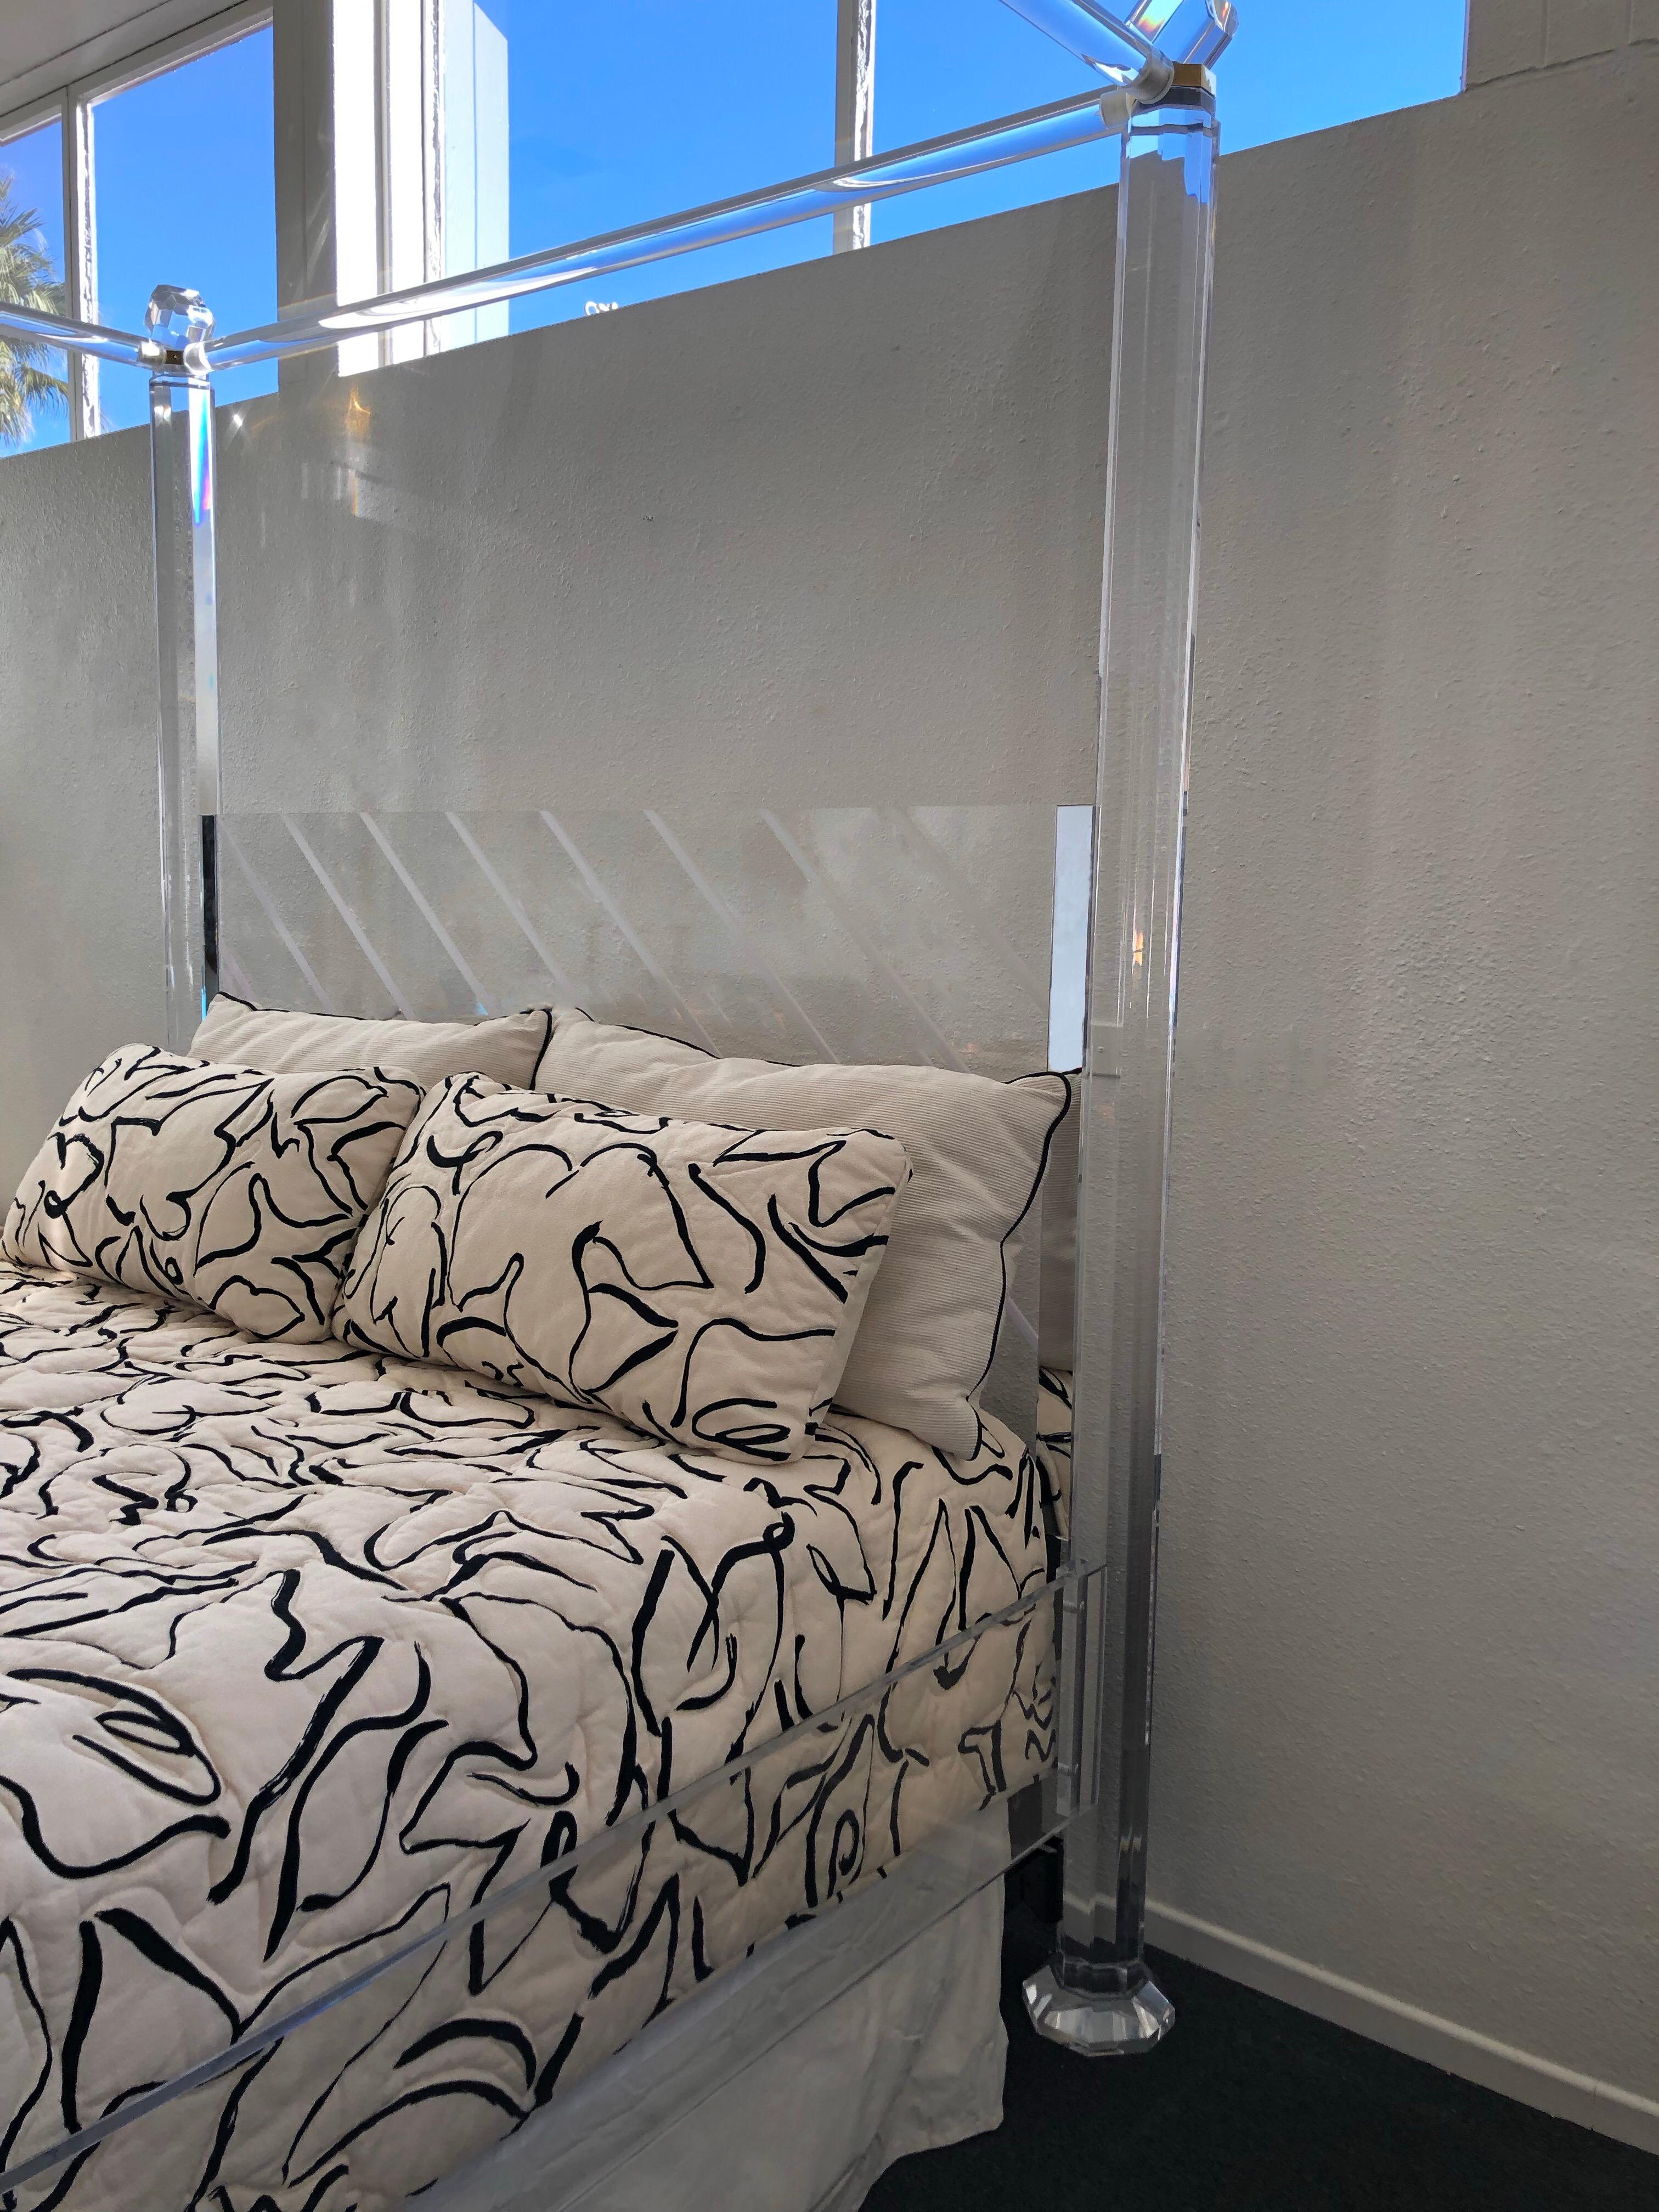 clear acrylic bed frame